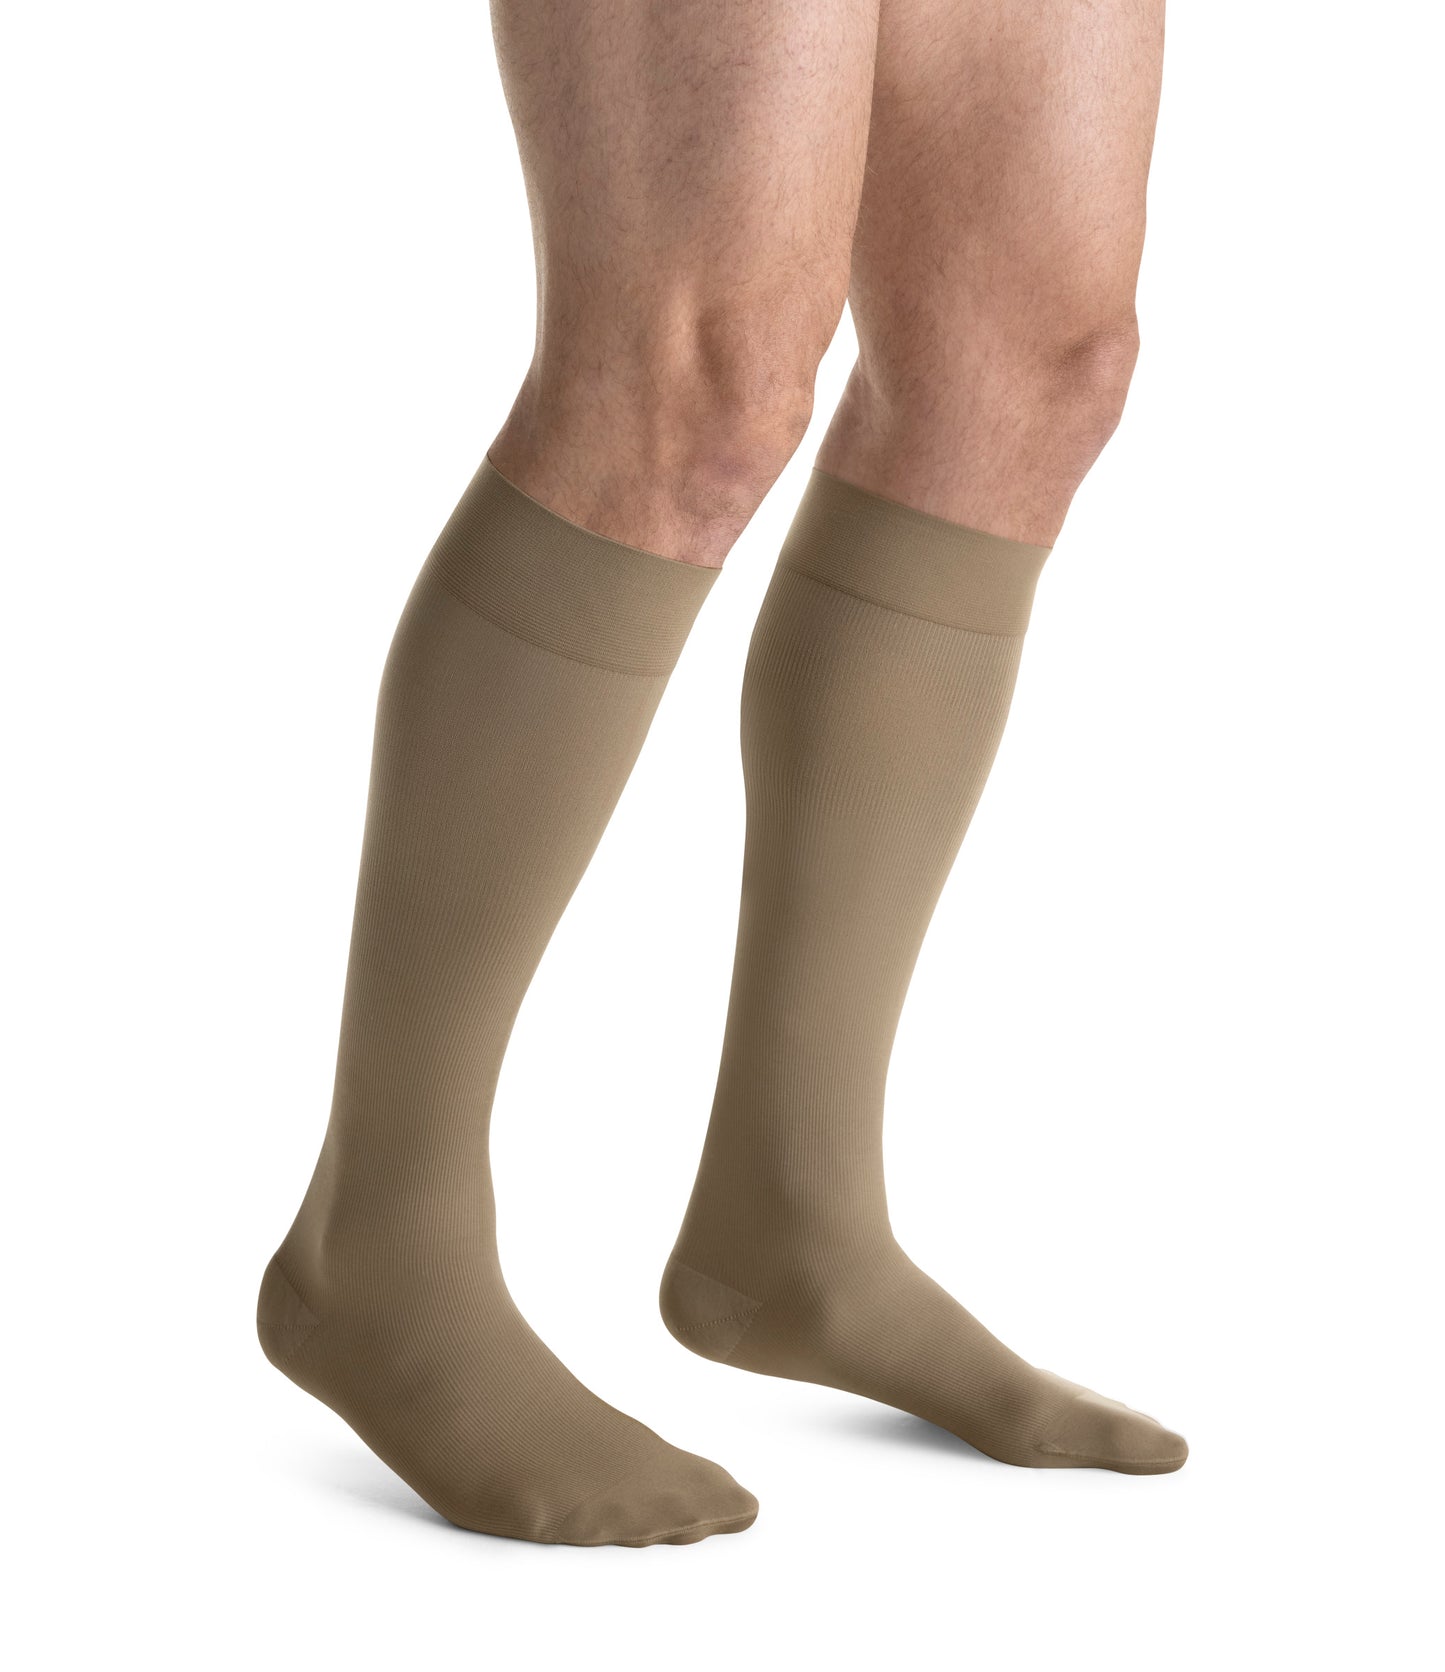 JOBST forMen Compression Socks 20-30 mmHg Knee High Closed Toe